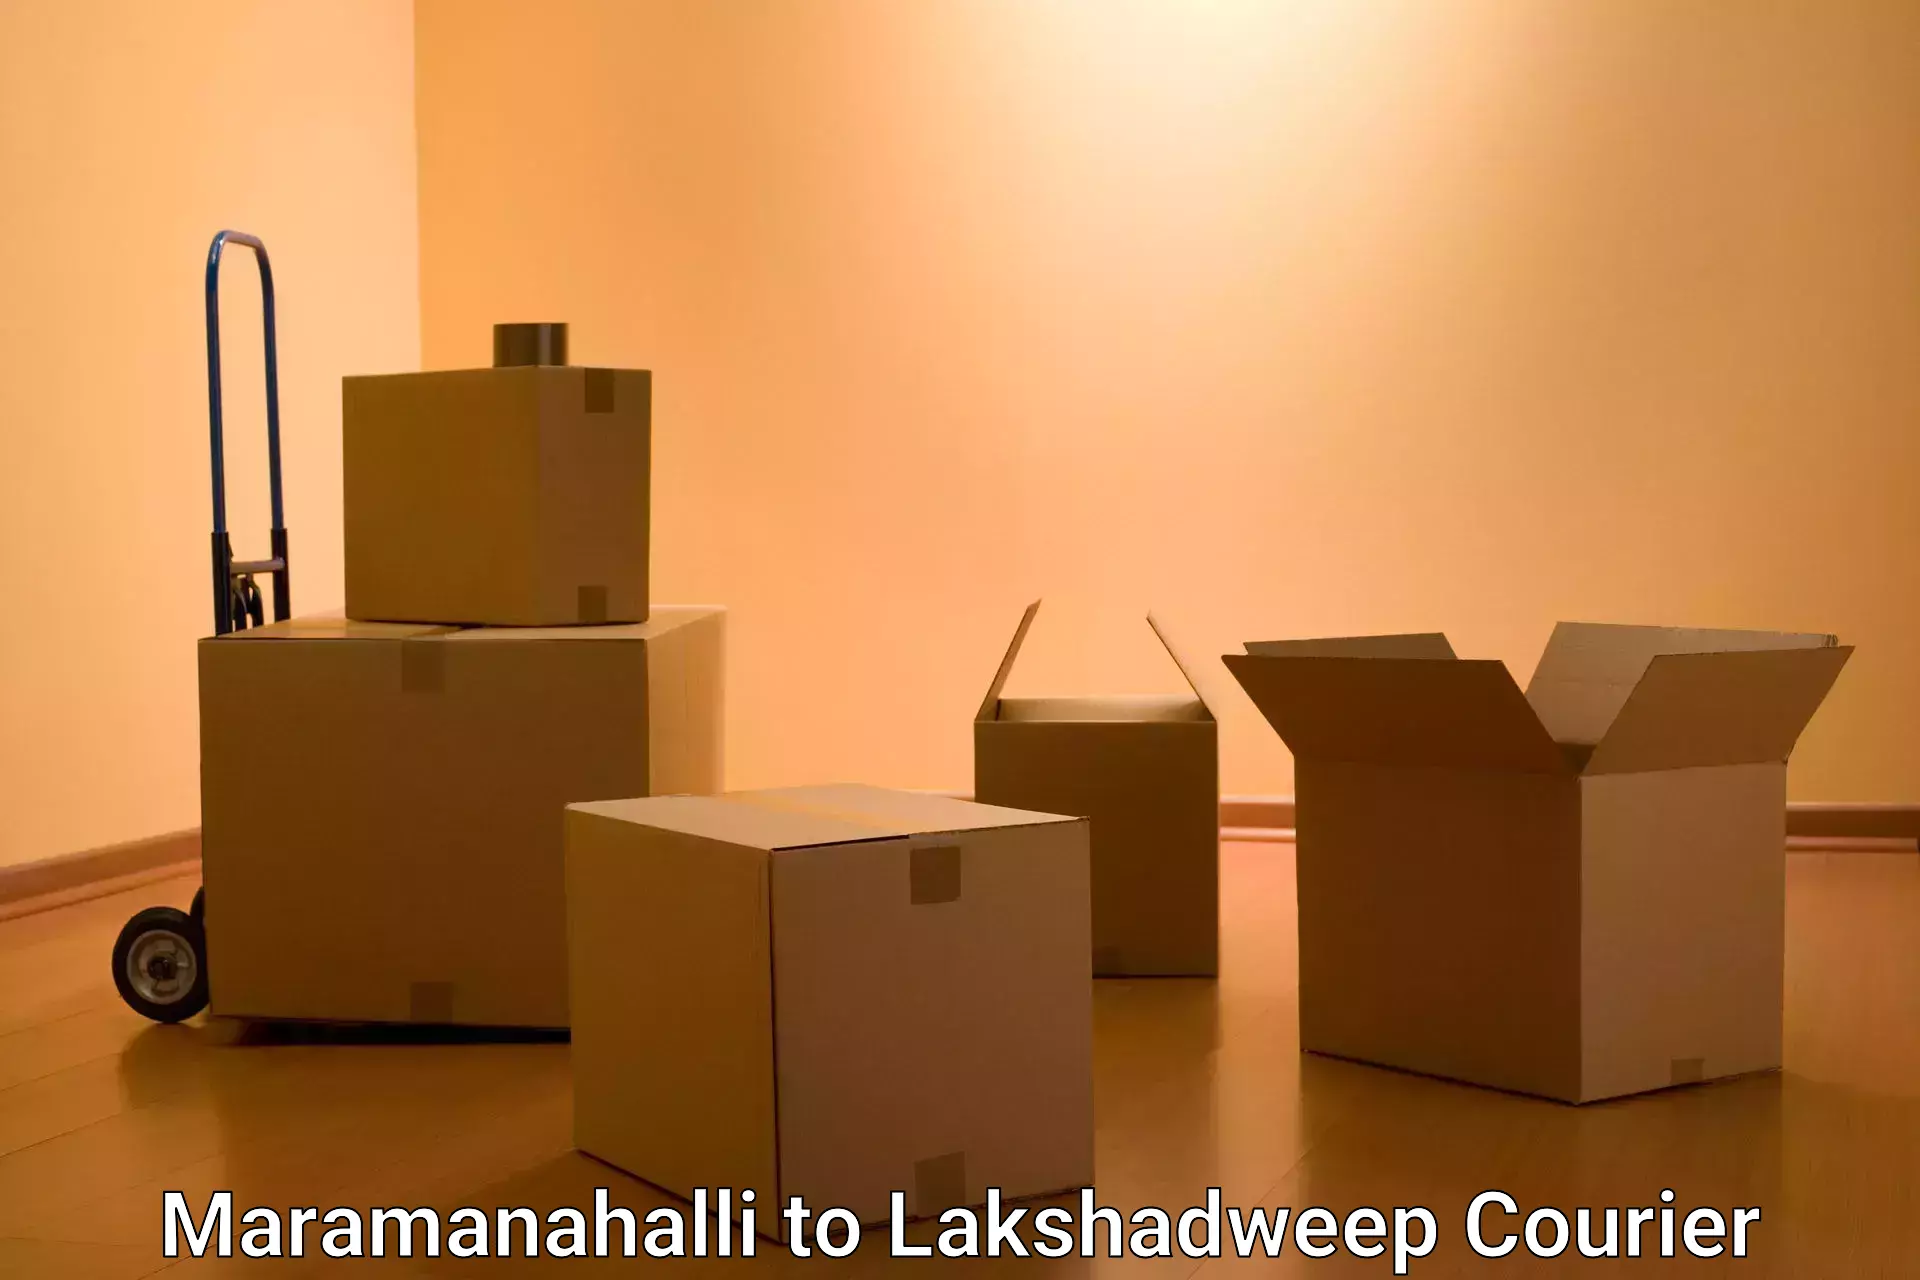 Advanced shipping technology Maramanahalli to Lakshadweep